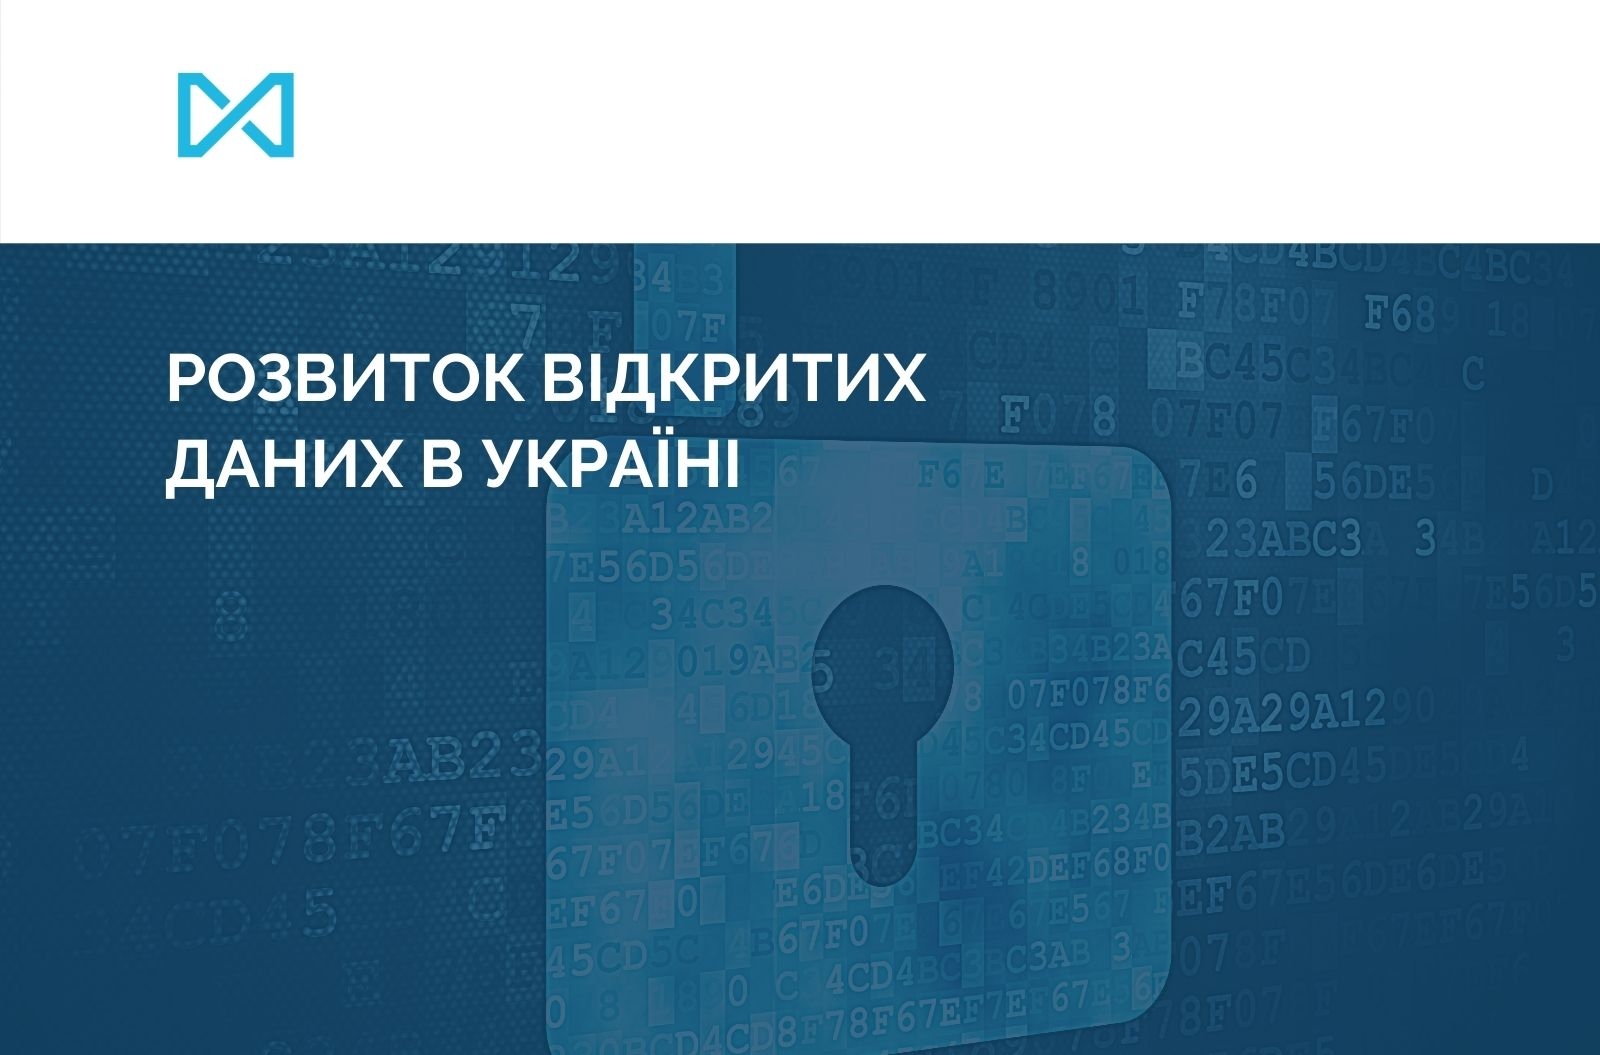 Development of open data in Ukraine